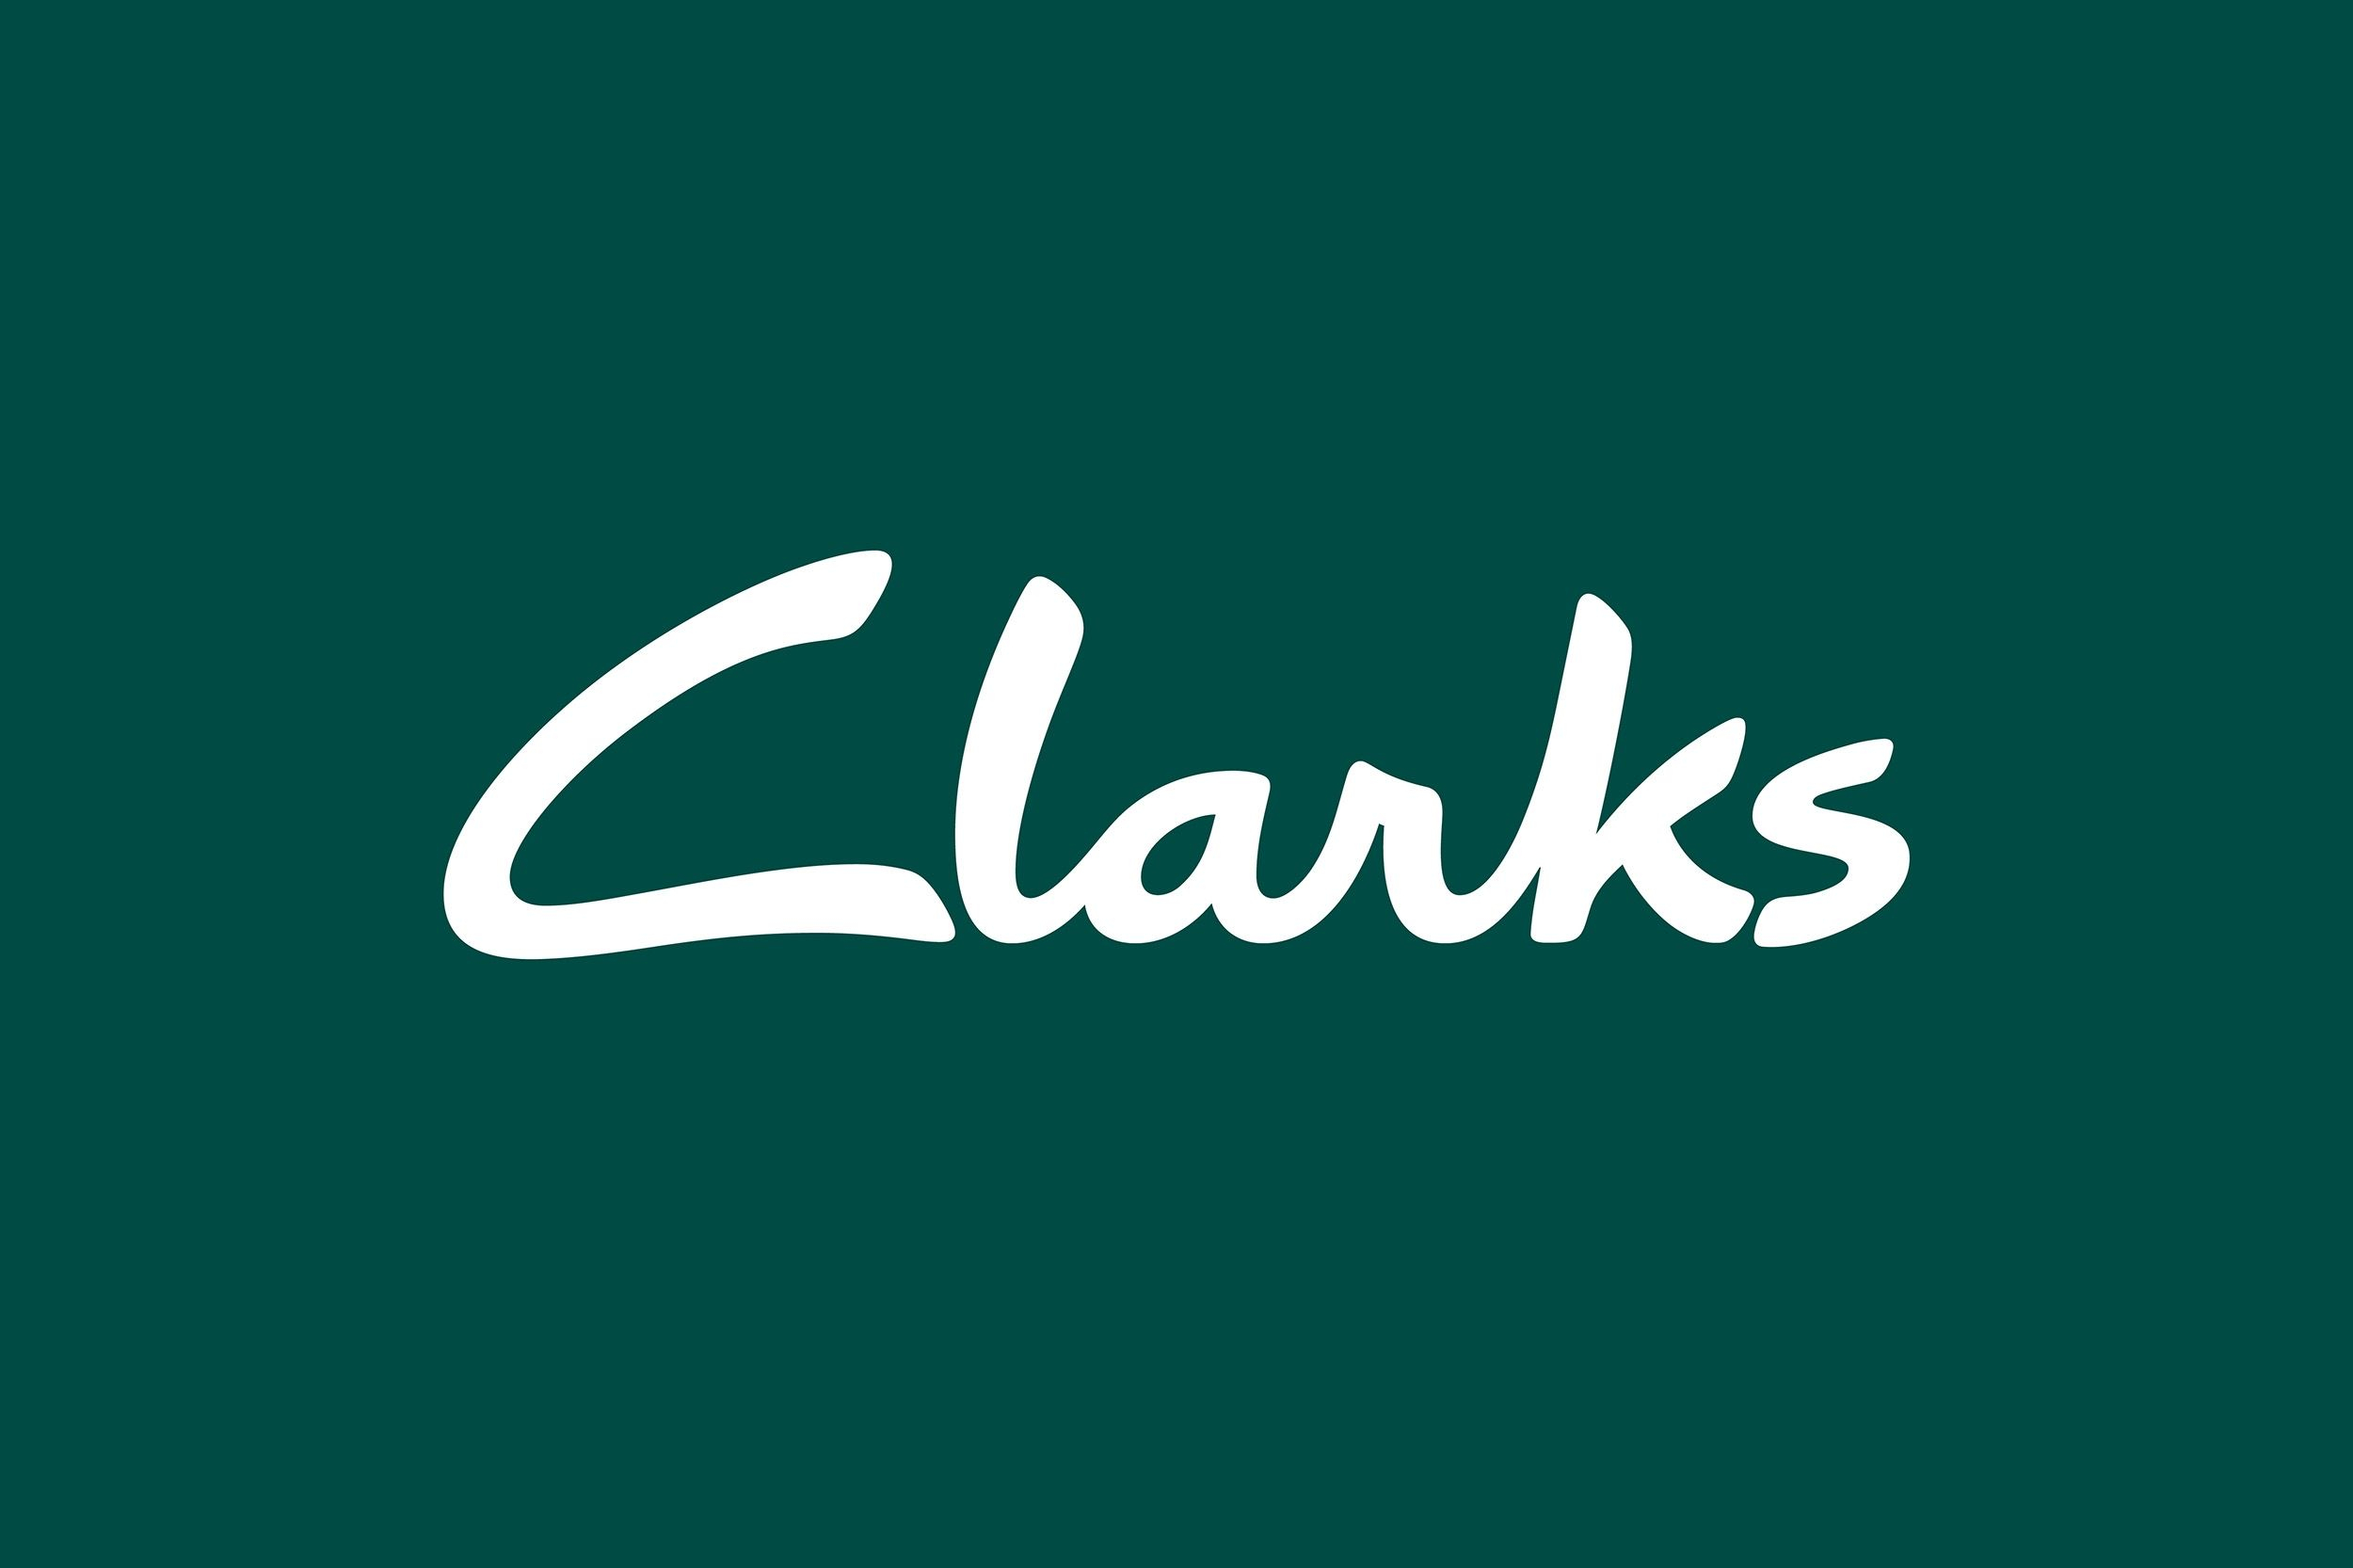 clarks promotion code 2019